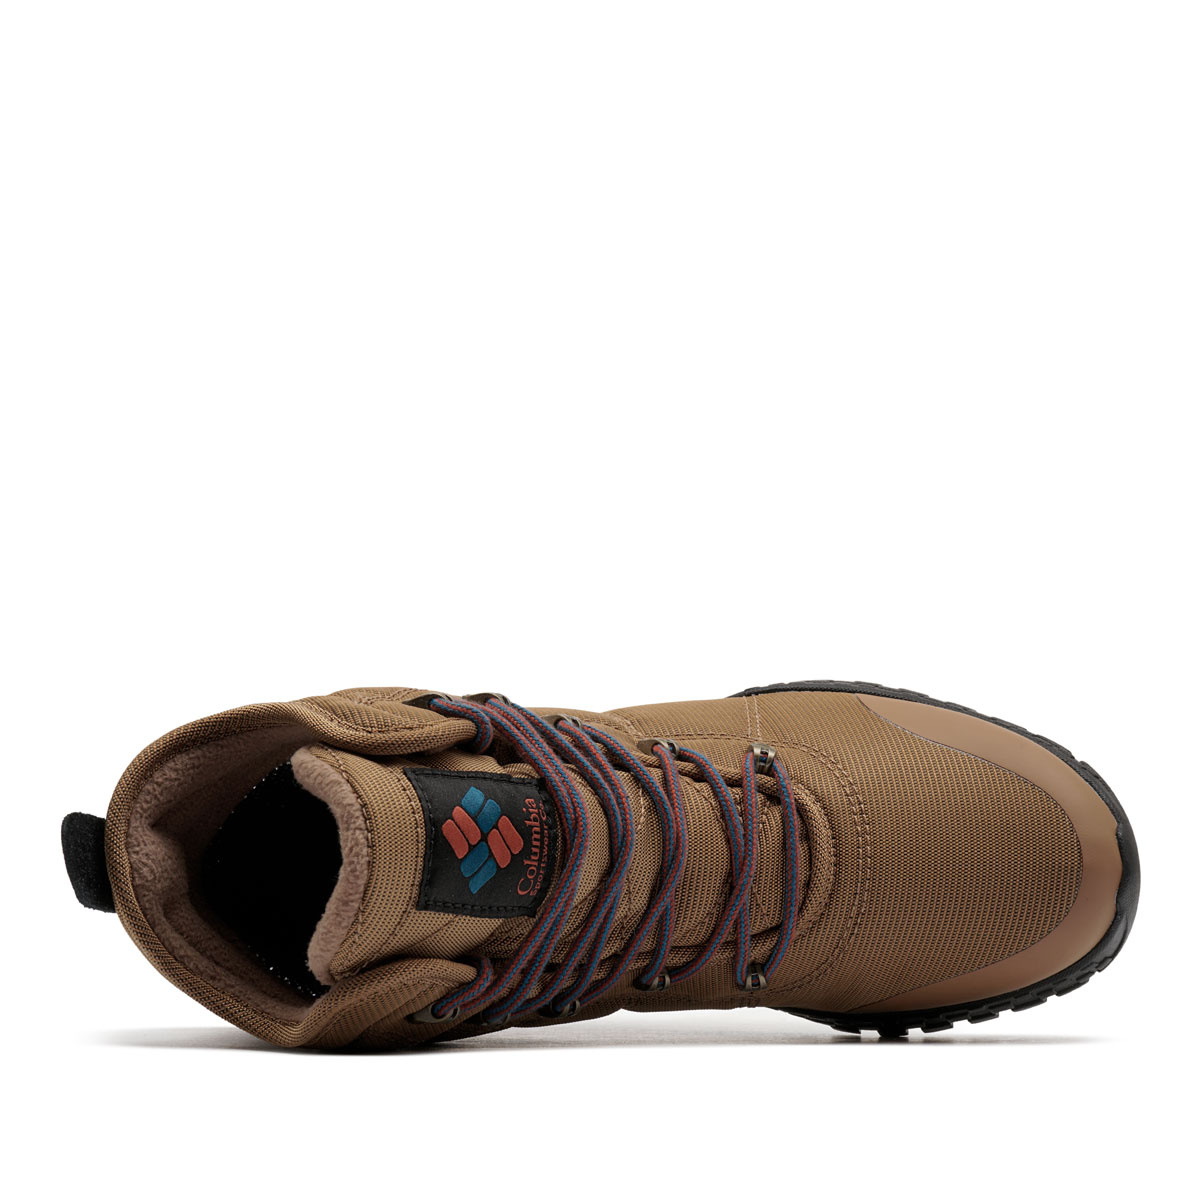 Columbia Fairbanks Omni-Heat Мъжки зимни обувки 1746011288